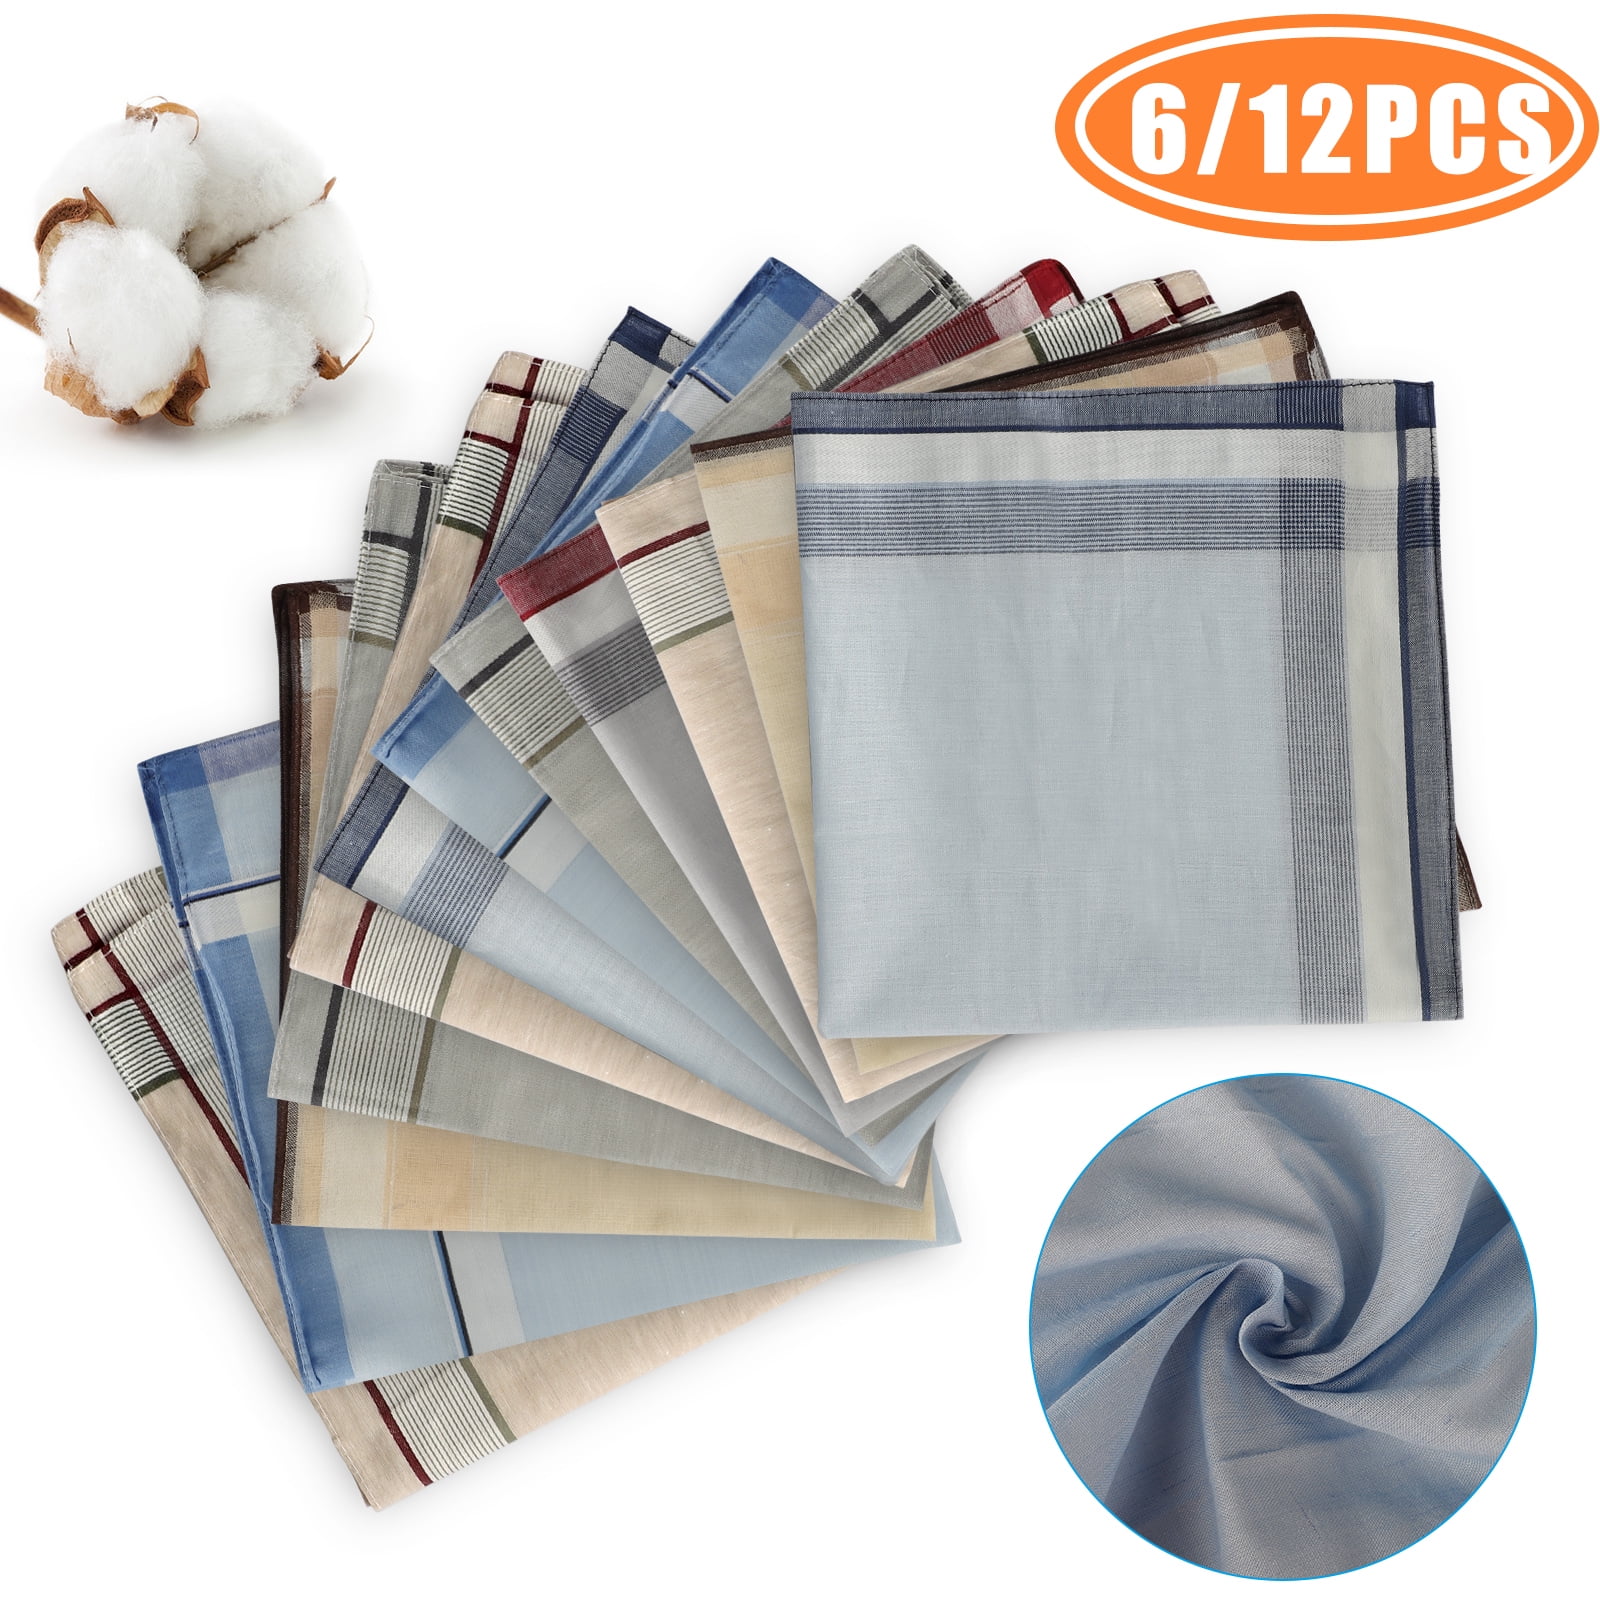 3Packs 100% Cotton Men's Square Handkerchiefs Classic Striped Pattern Hanky